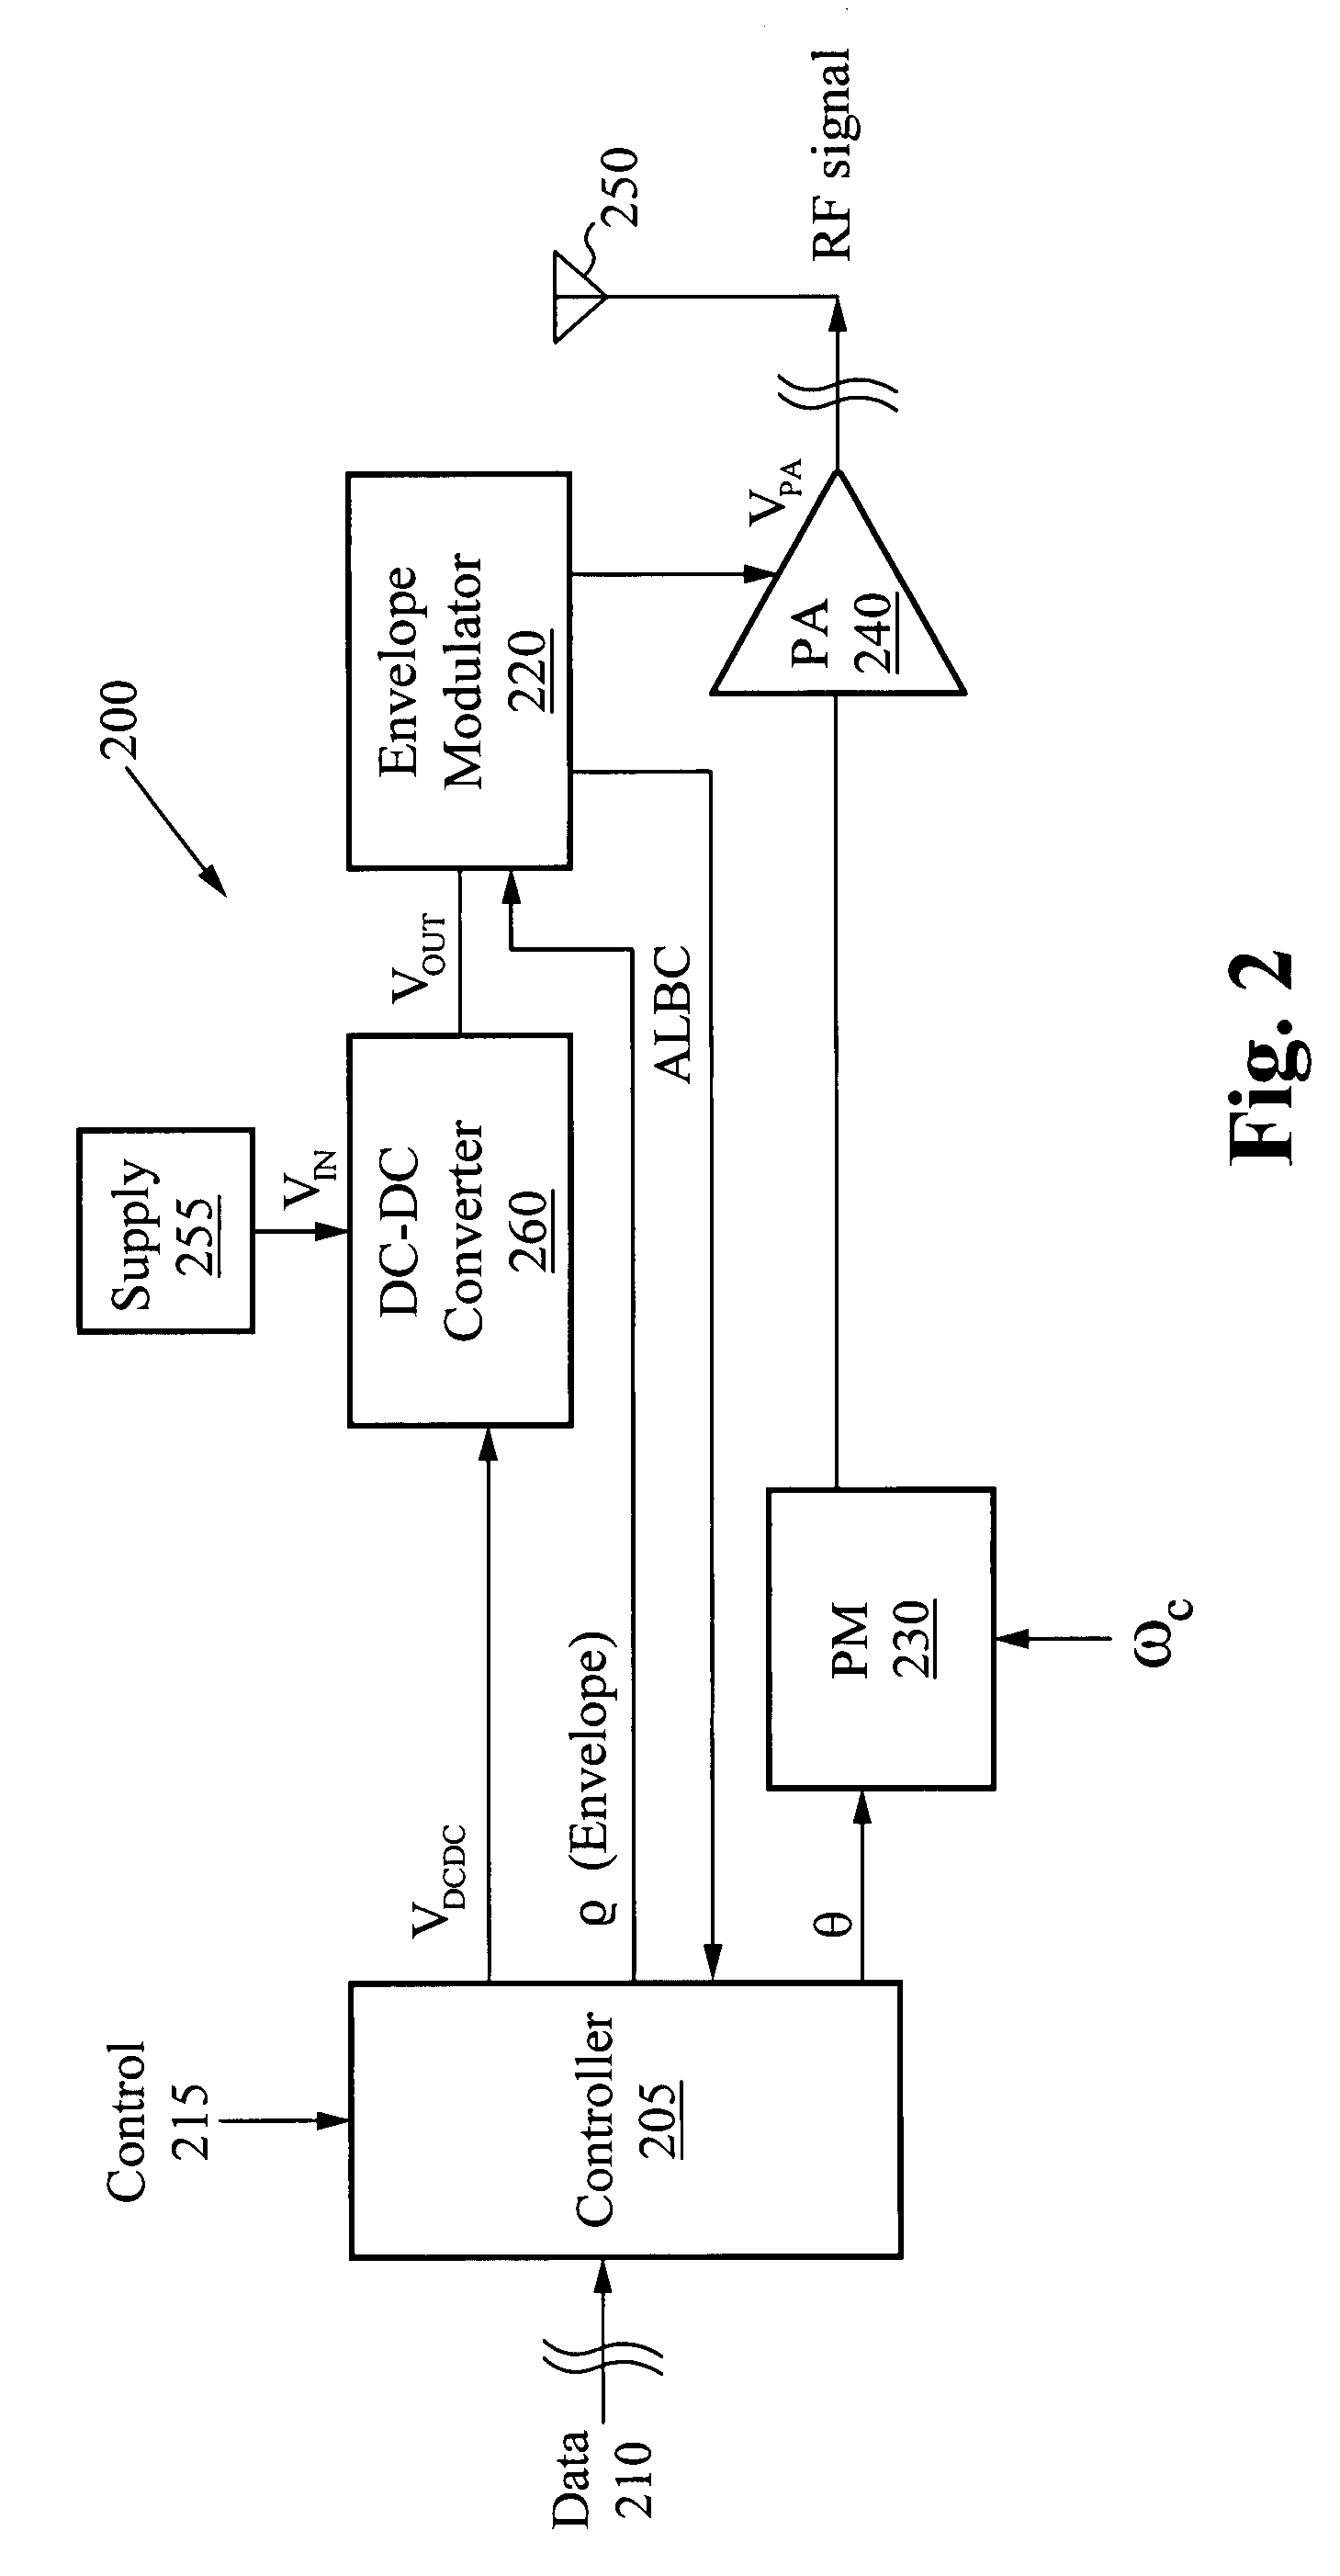 Envelope modulator saturation detection using a DC-DC converter